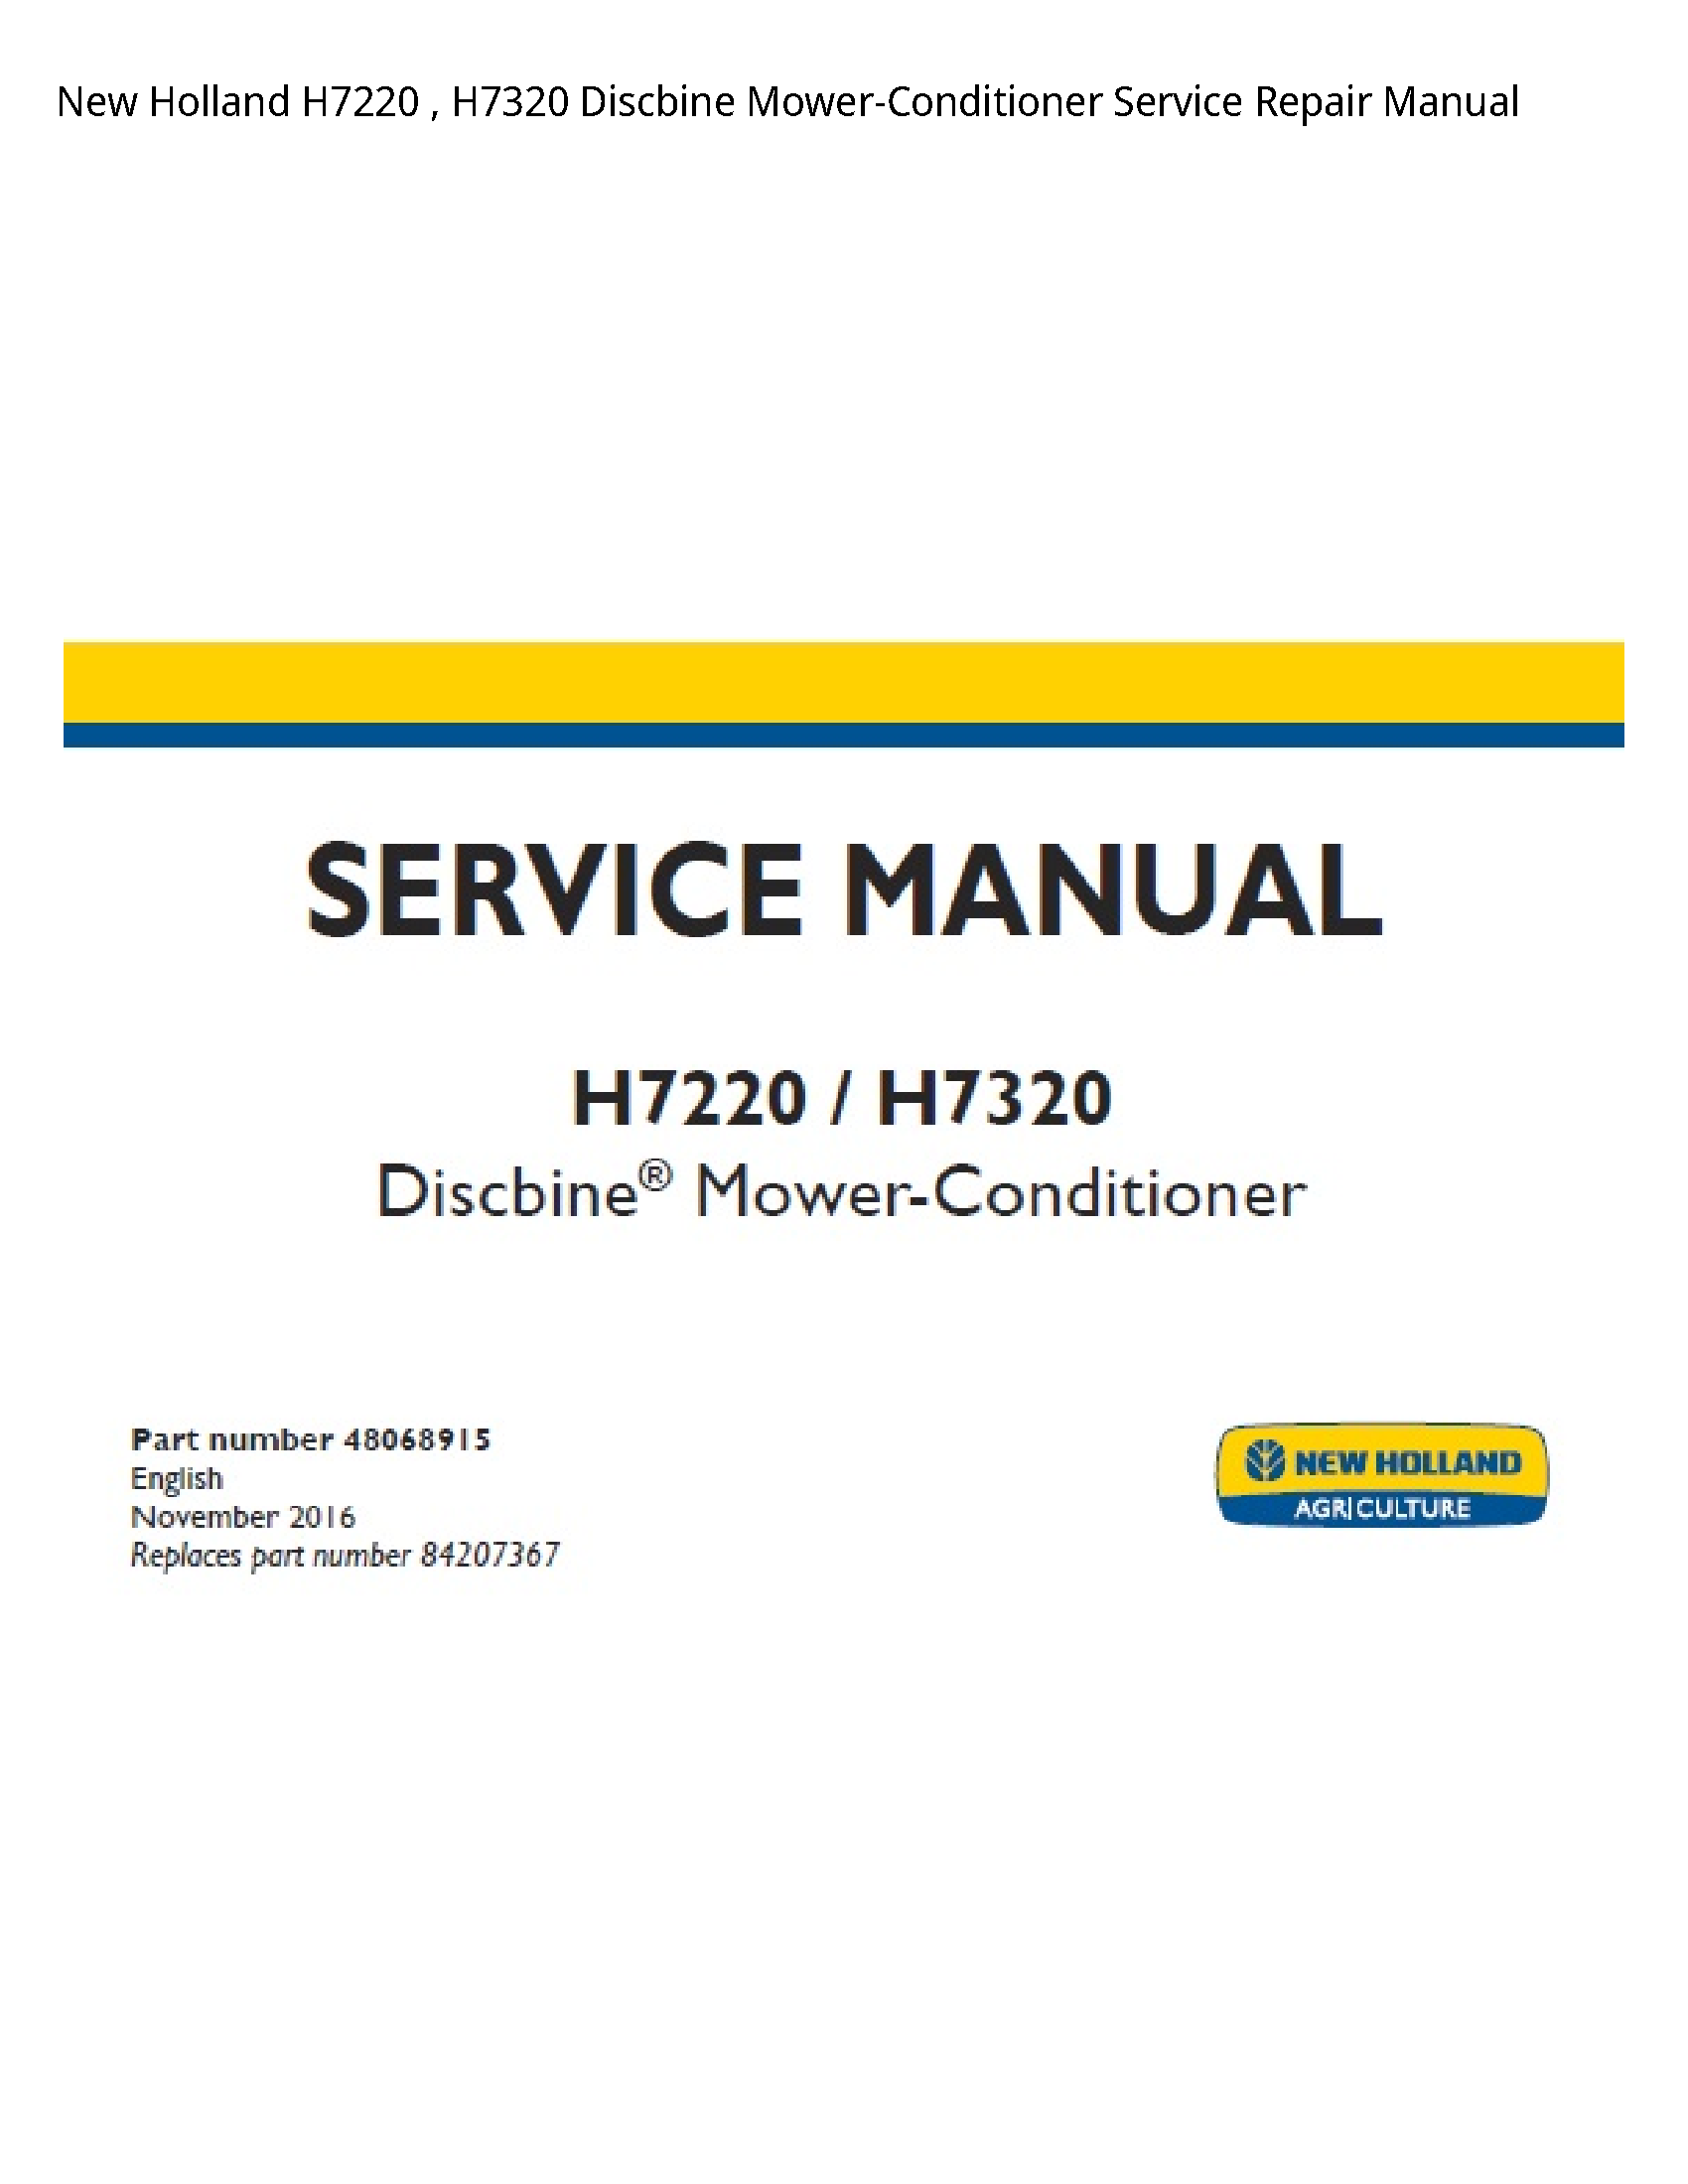 New Holland H7220 Discbine Mower-Conditioner manual